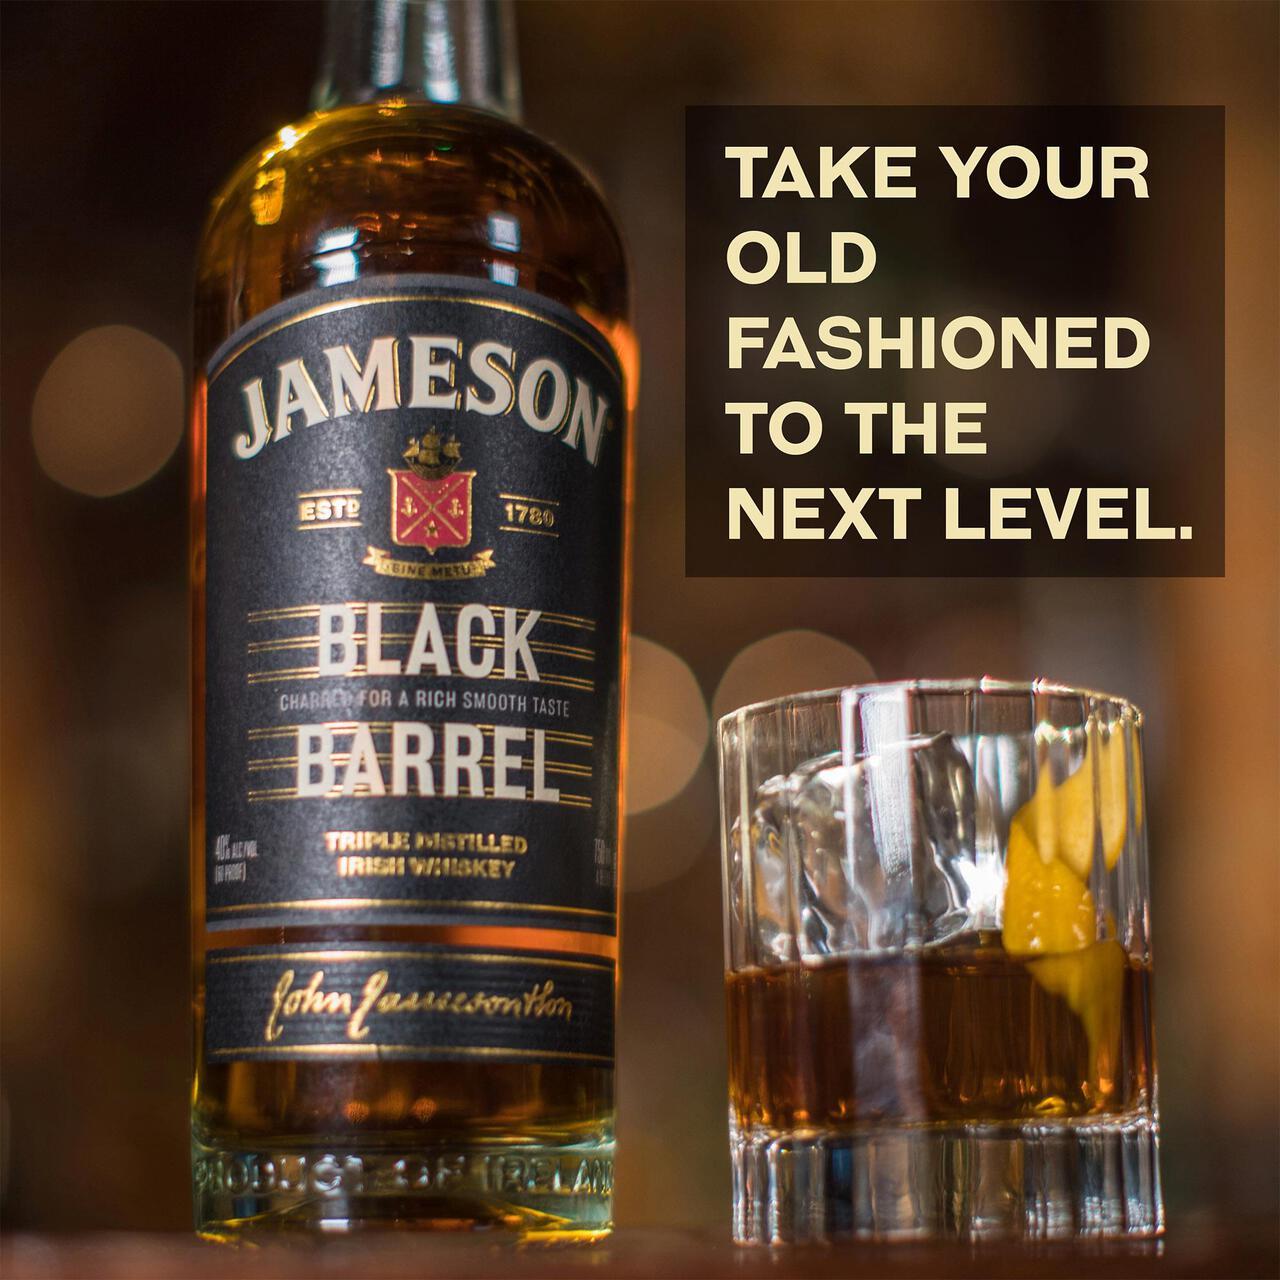 Jameson Black Barrel Triple Distilled Blended Irish Whiskey 70cl